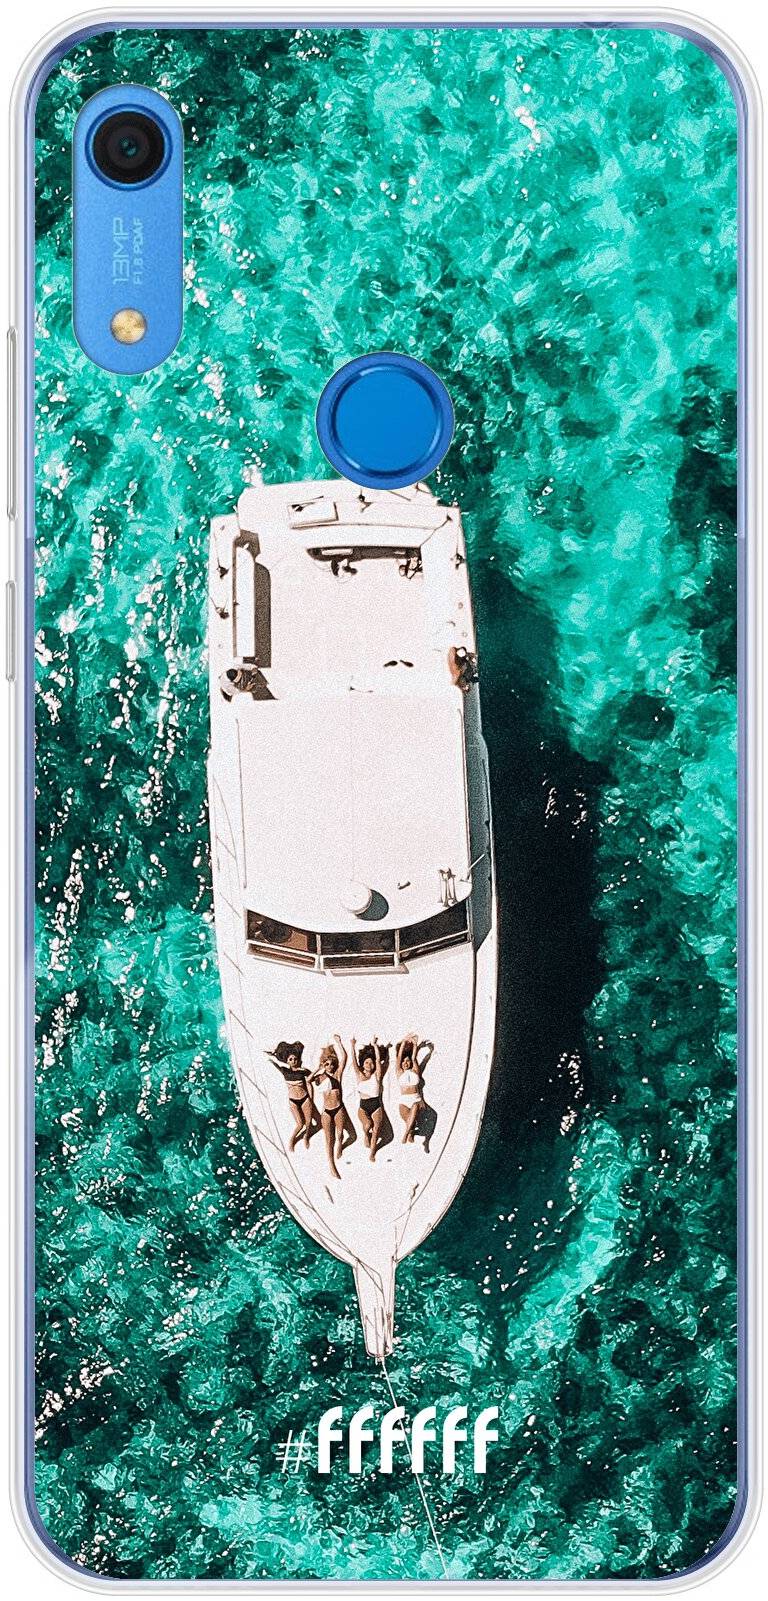 Yacht Life Y6s